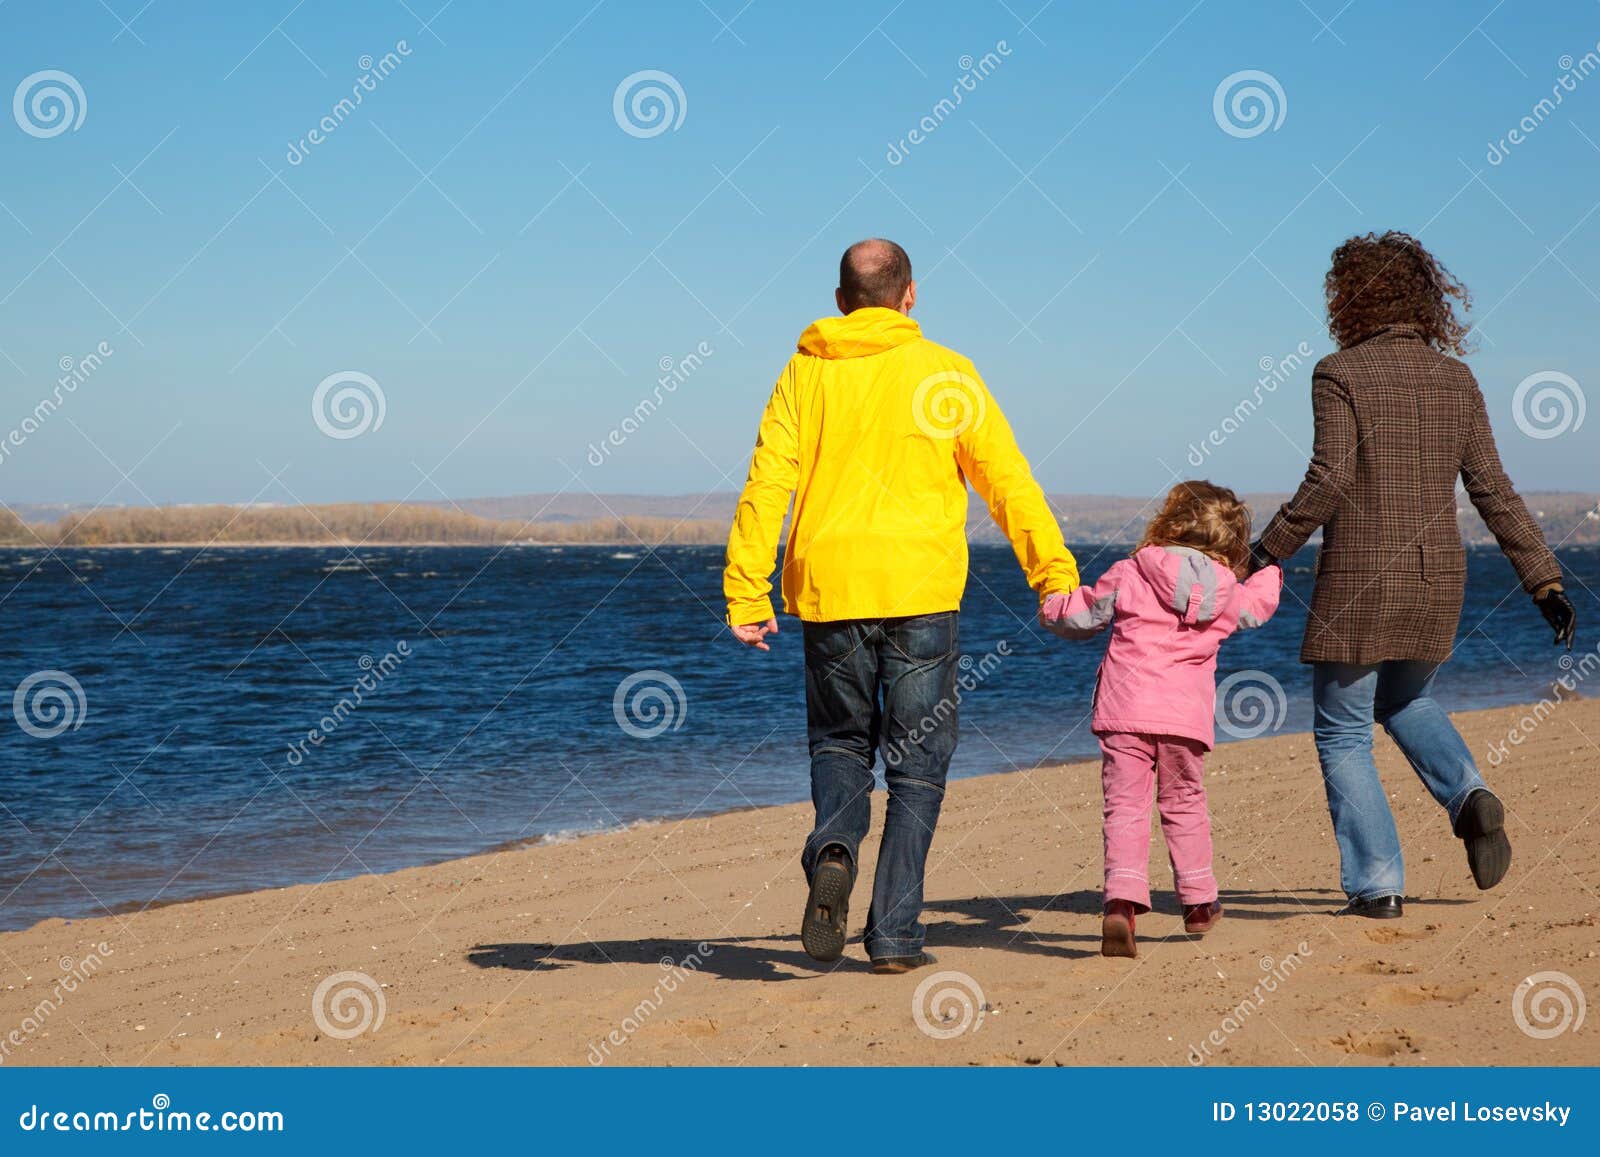 family of three people walking along beach.